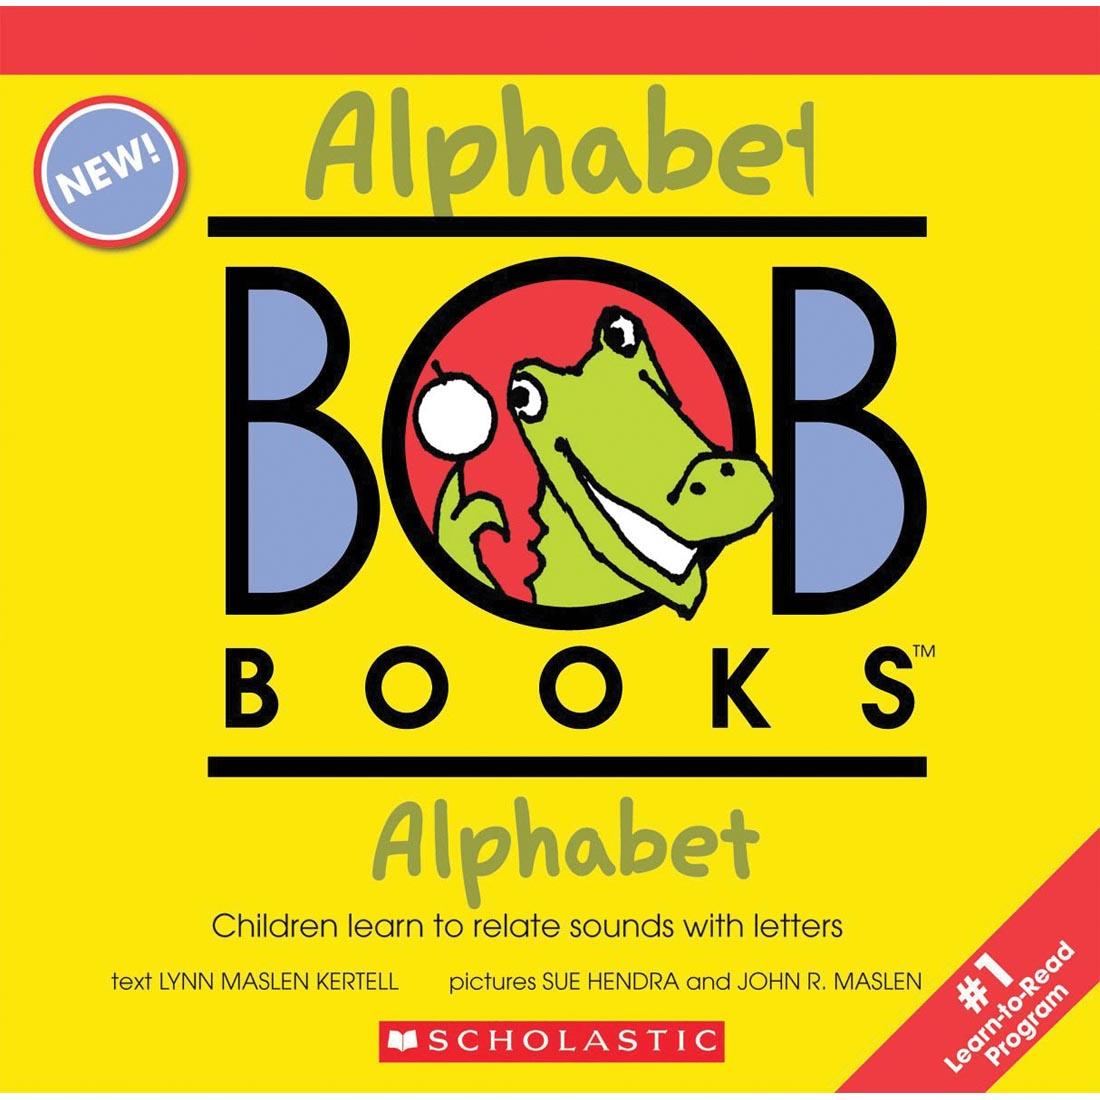 Alphabet BOB Books by Scholastic